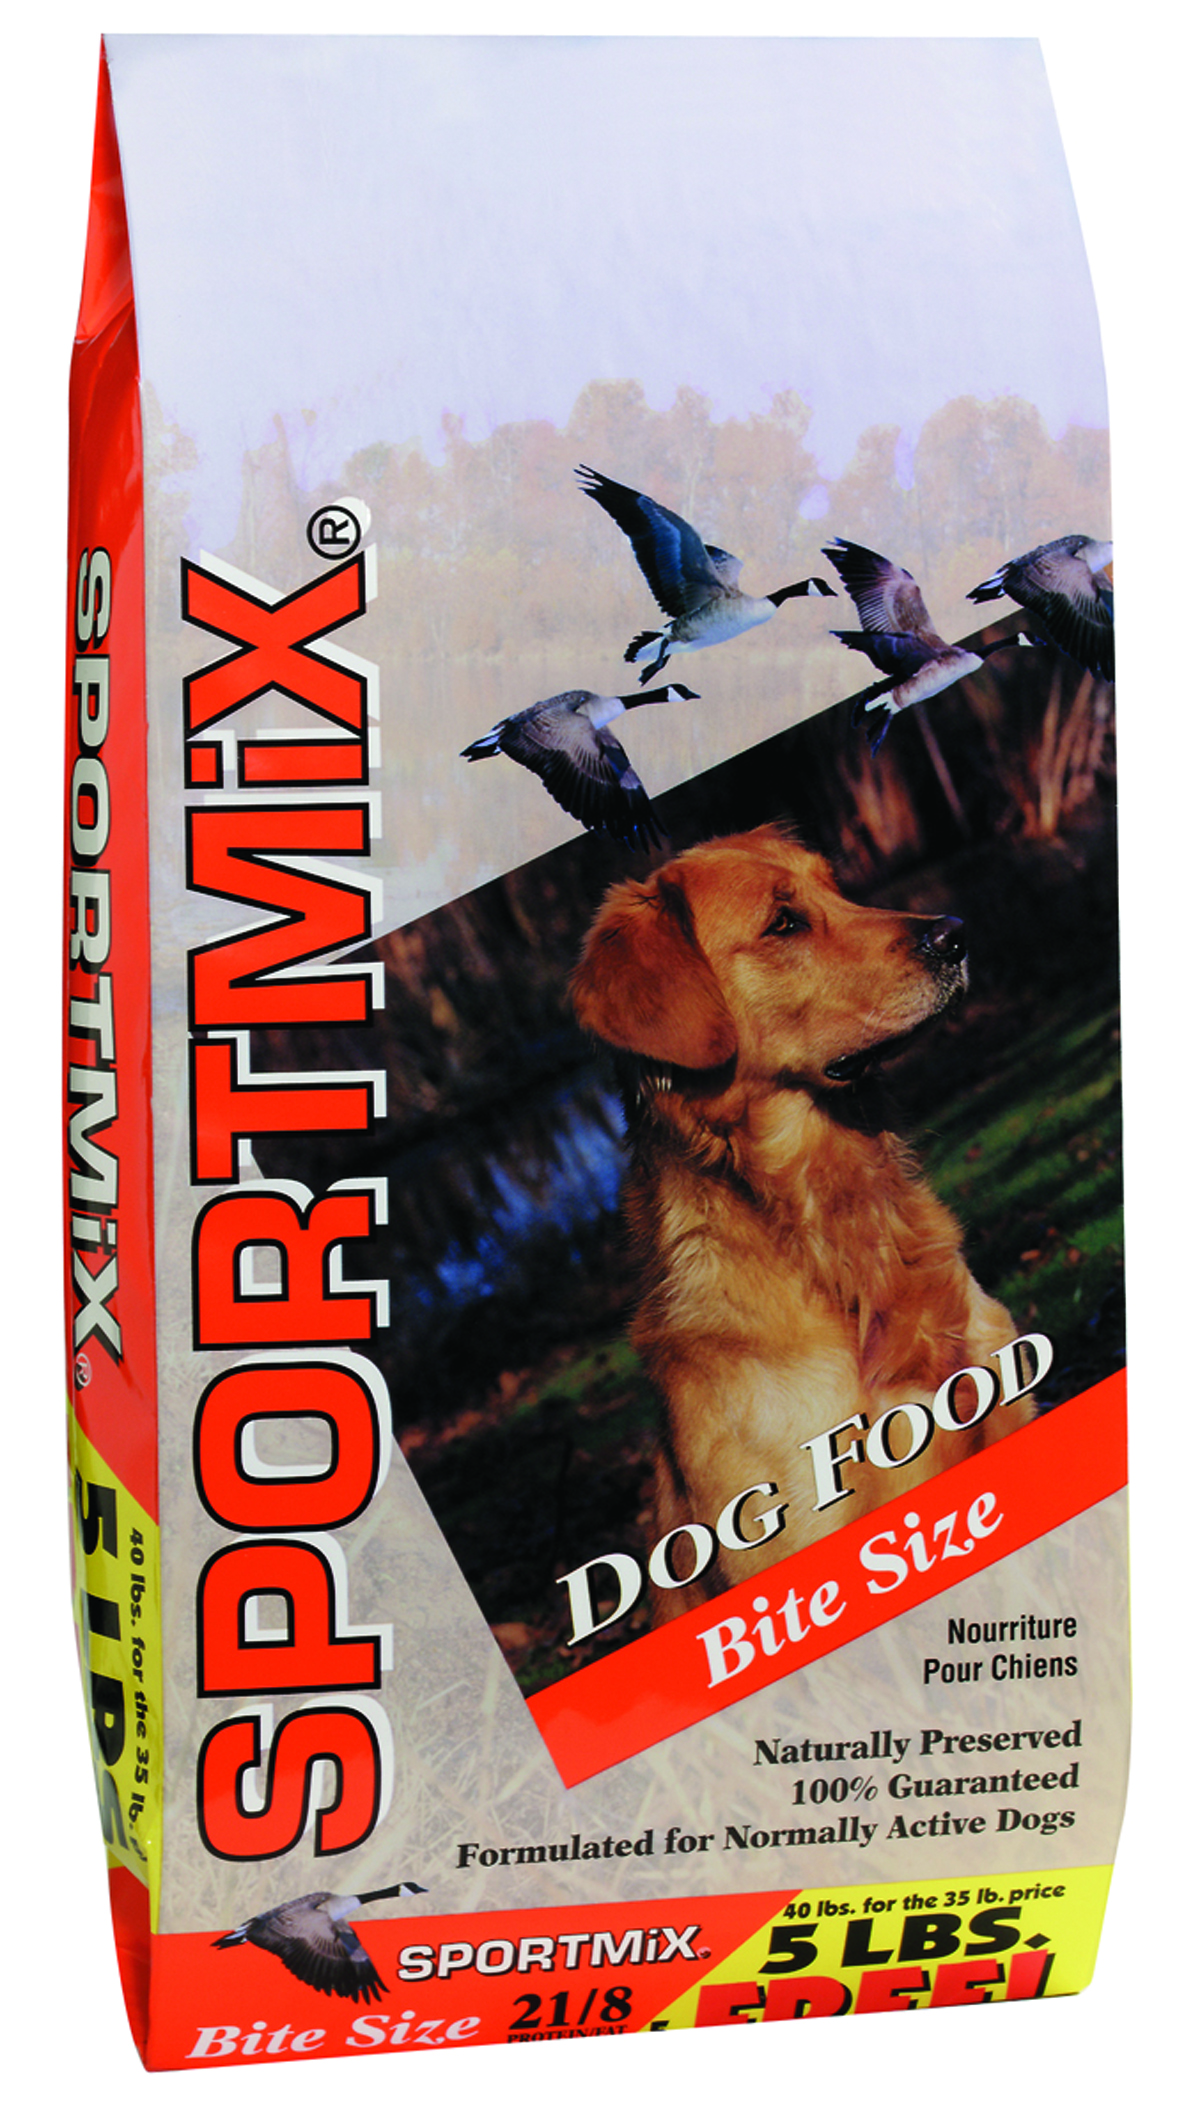 SPORTMiX Dog Food - Bite Size 40 Lb